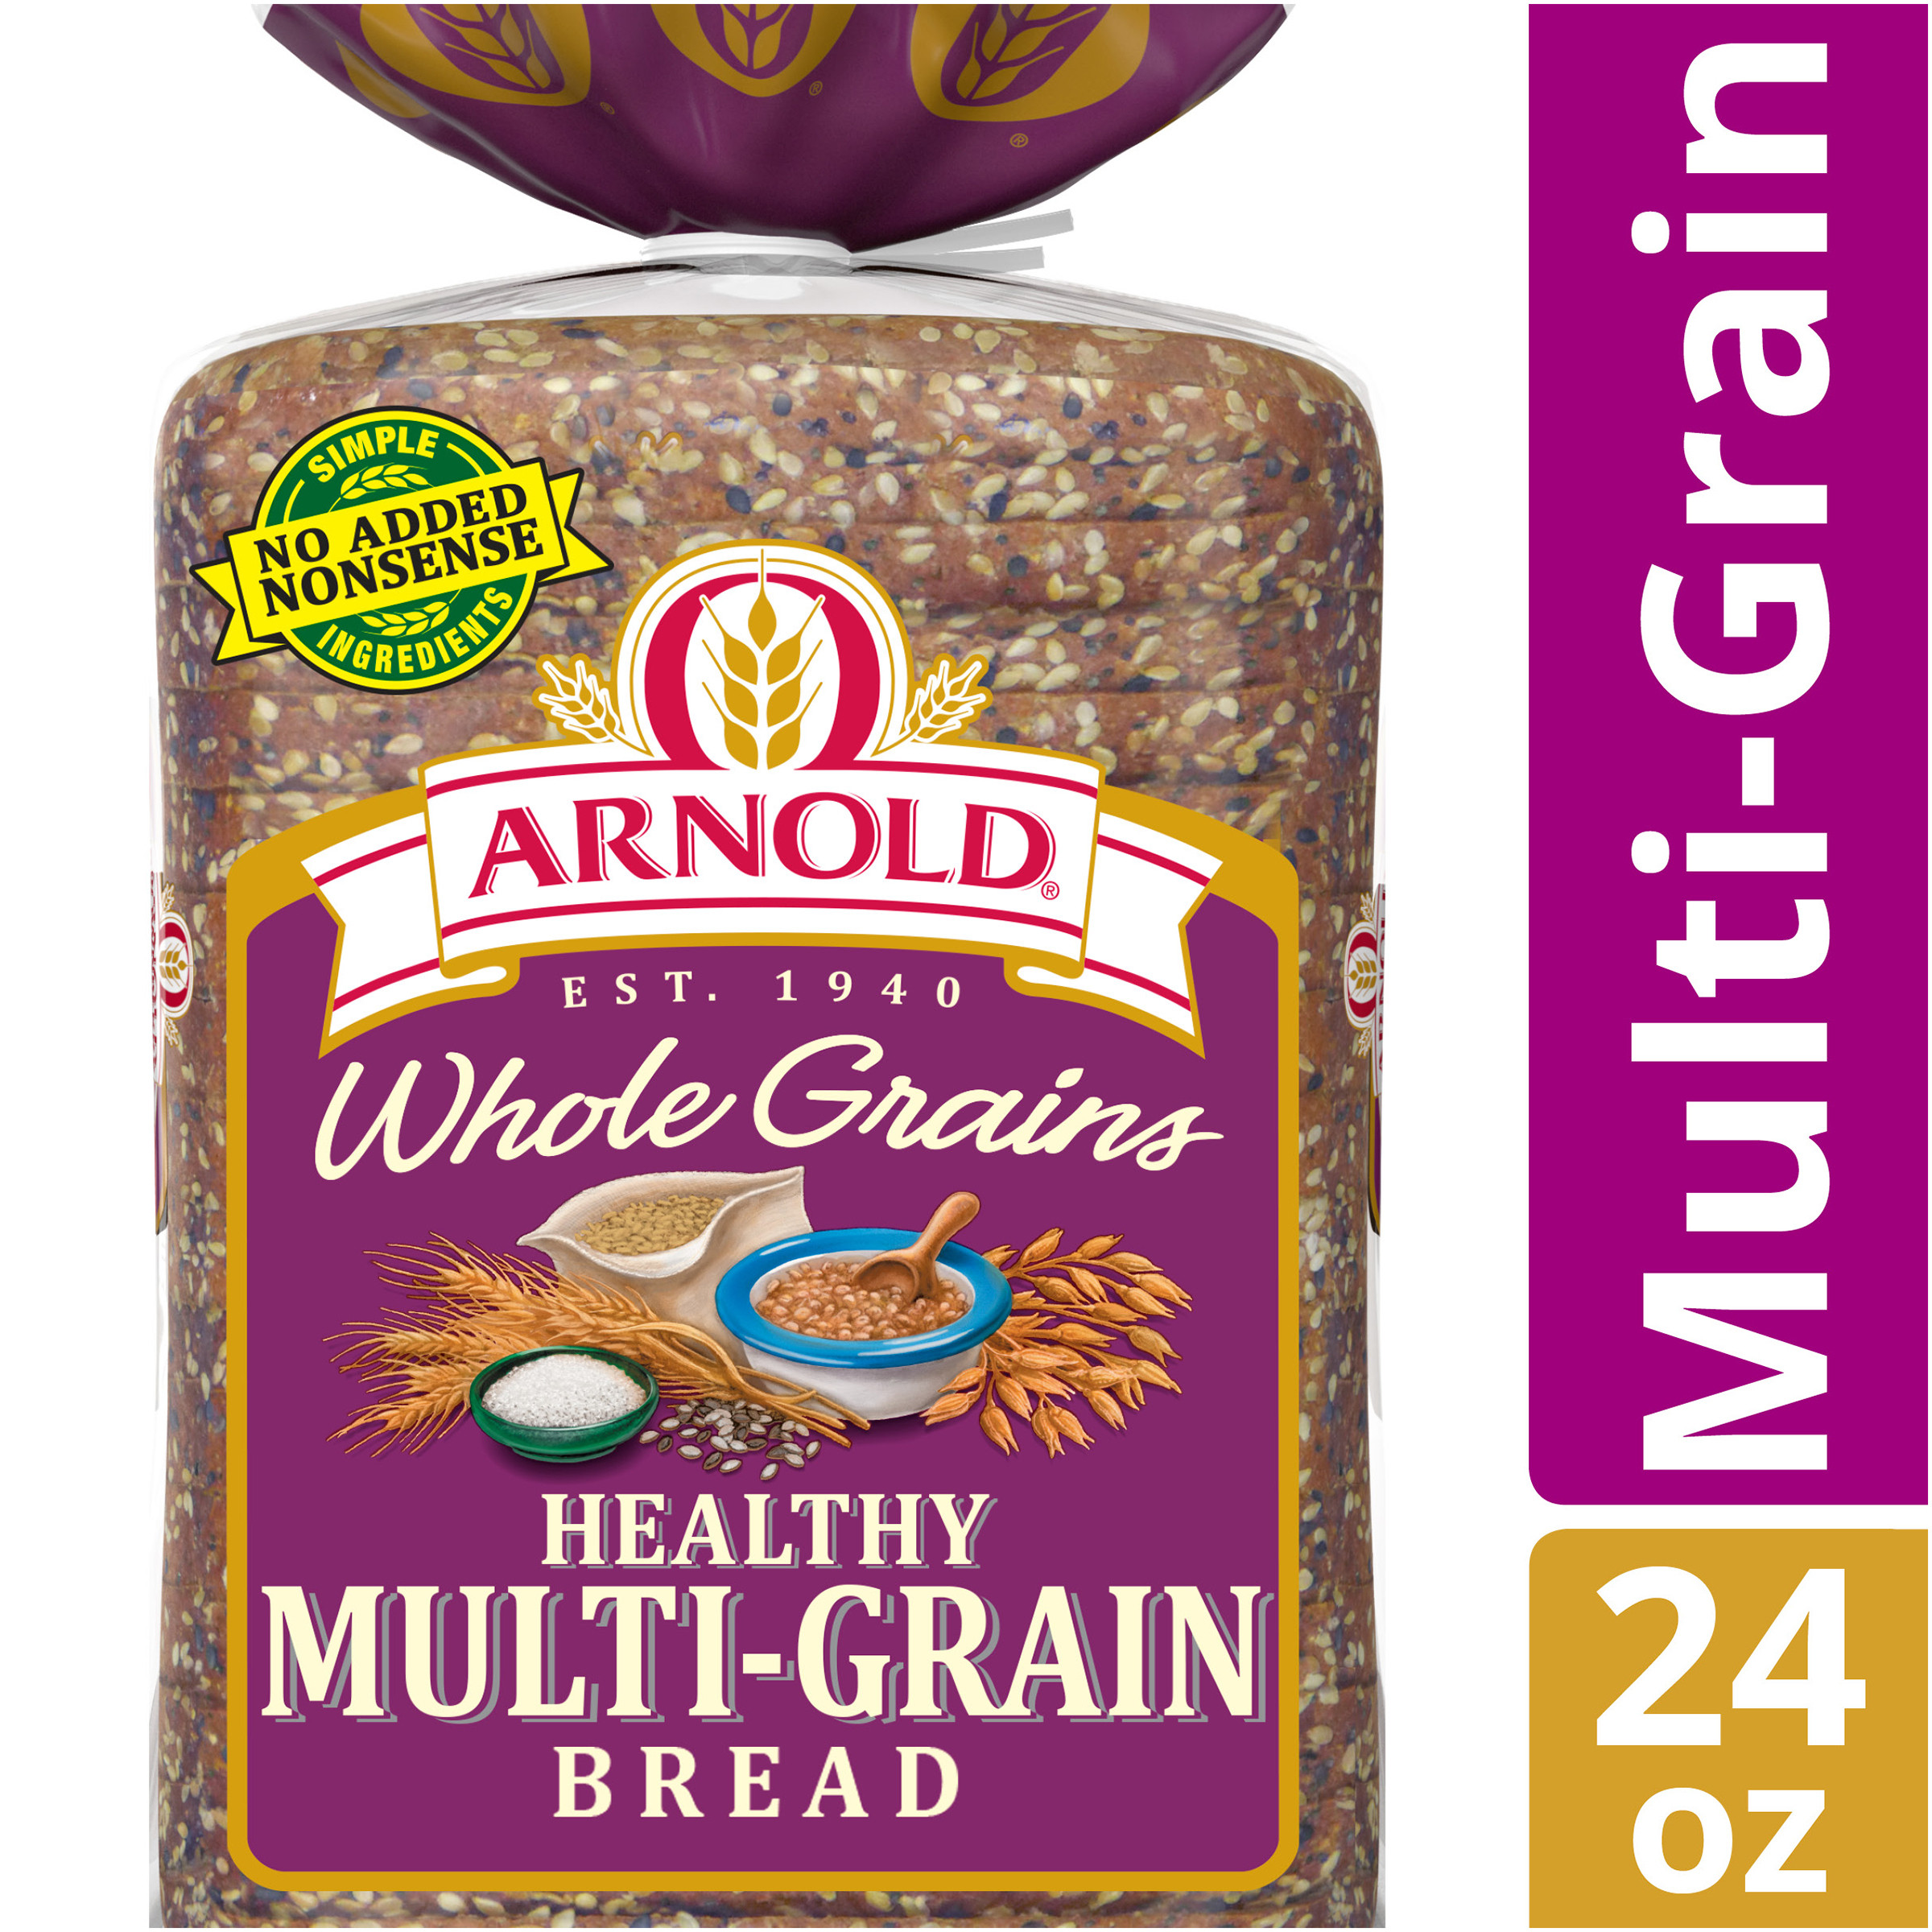 Arnold Whole Grain Bread
 Arnold Whole Grains Healthy Multi Grain Bread Baked with